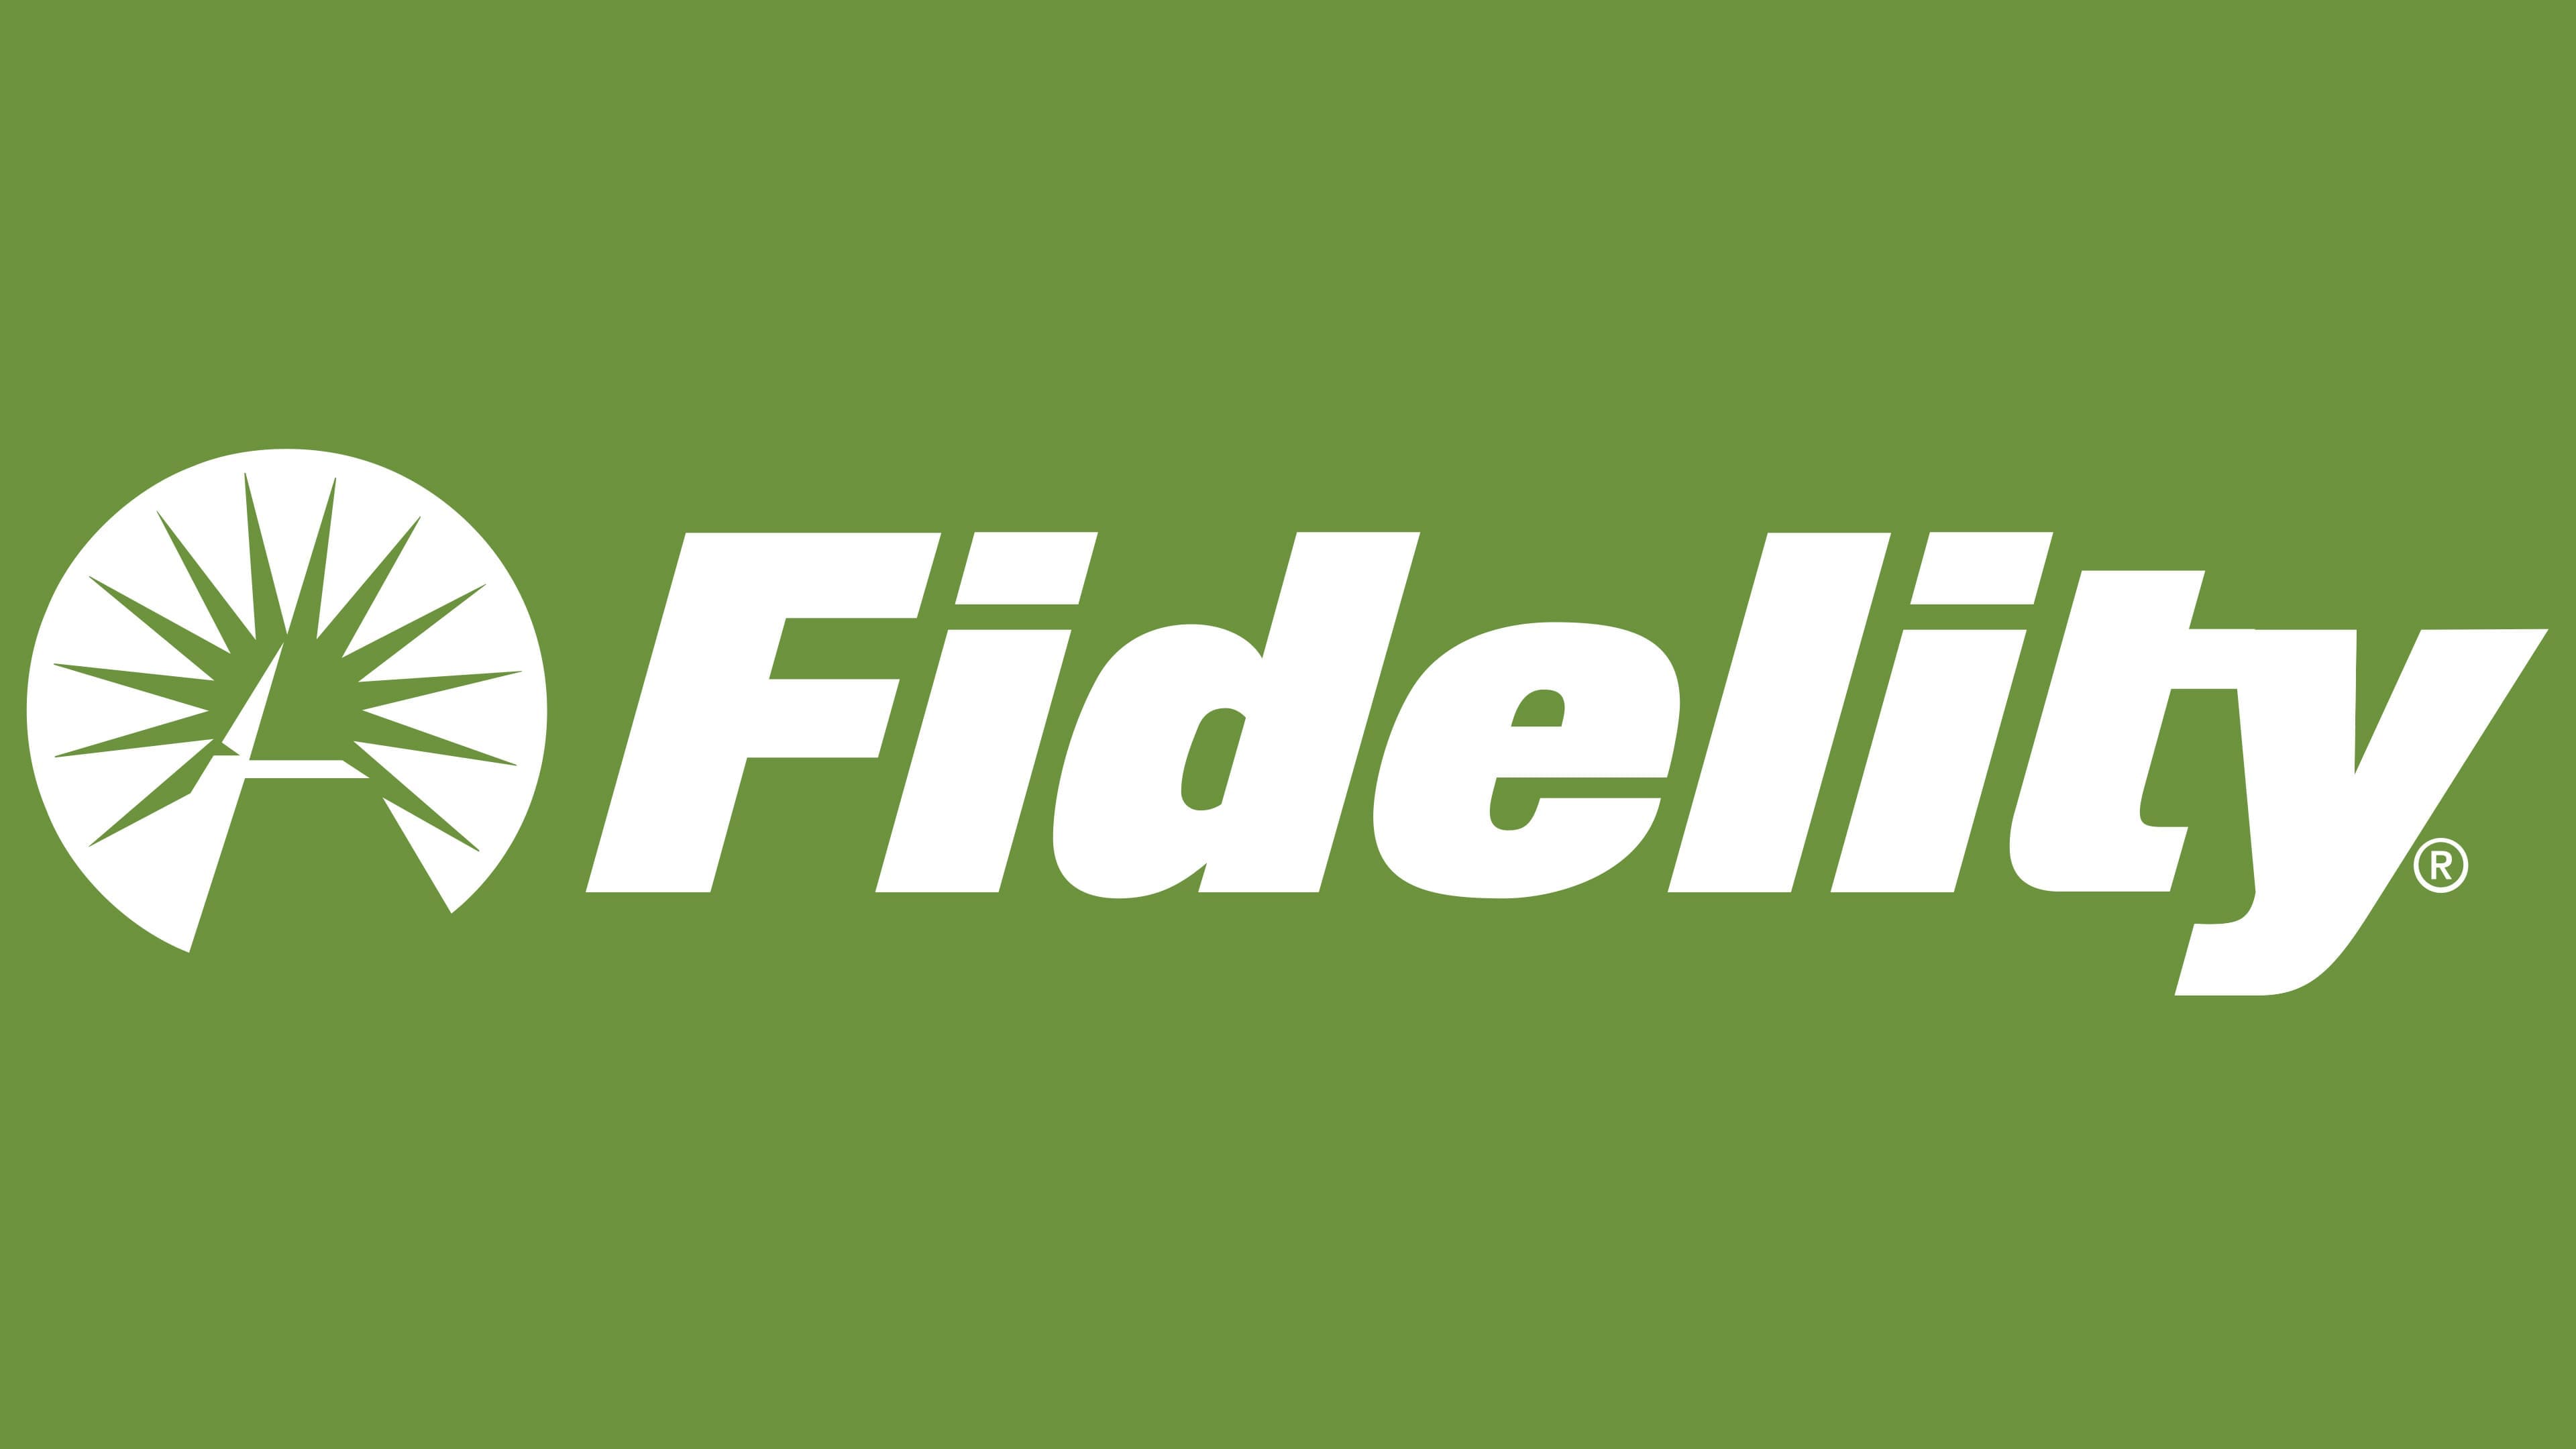 fidelity pyramid logo